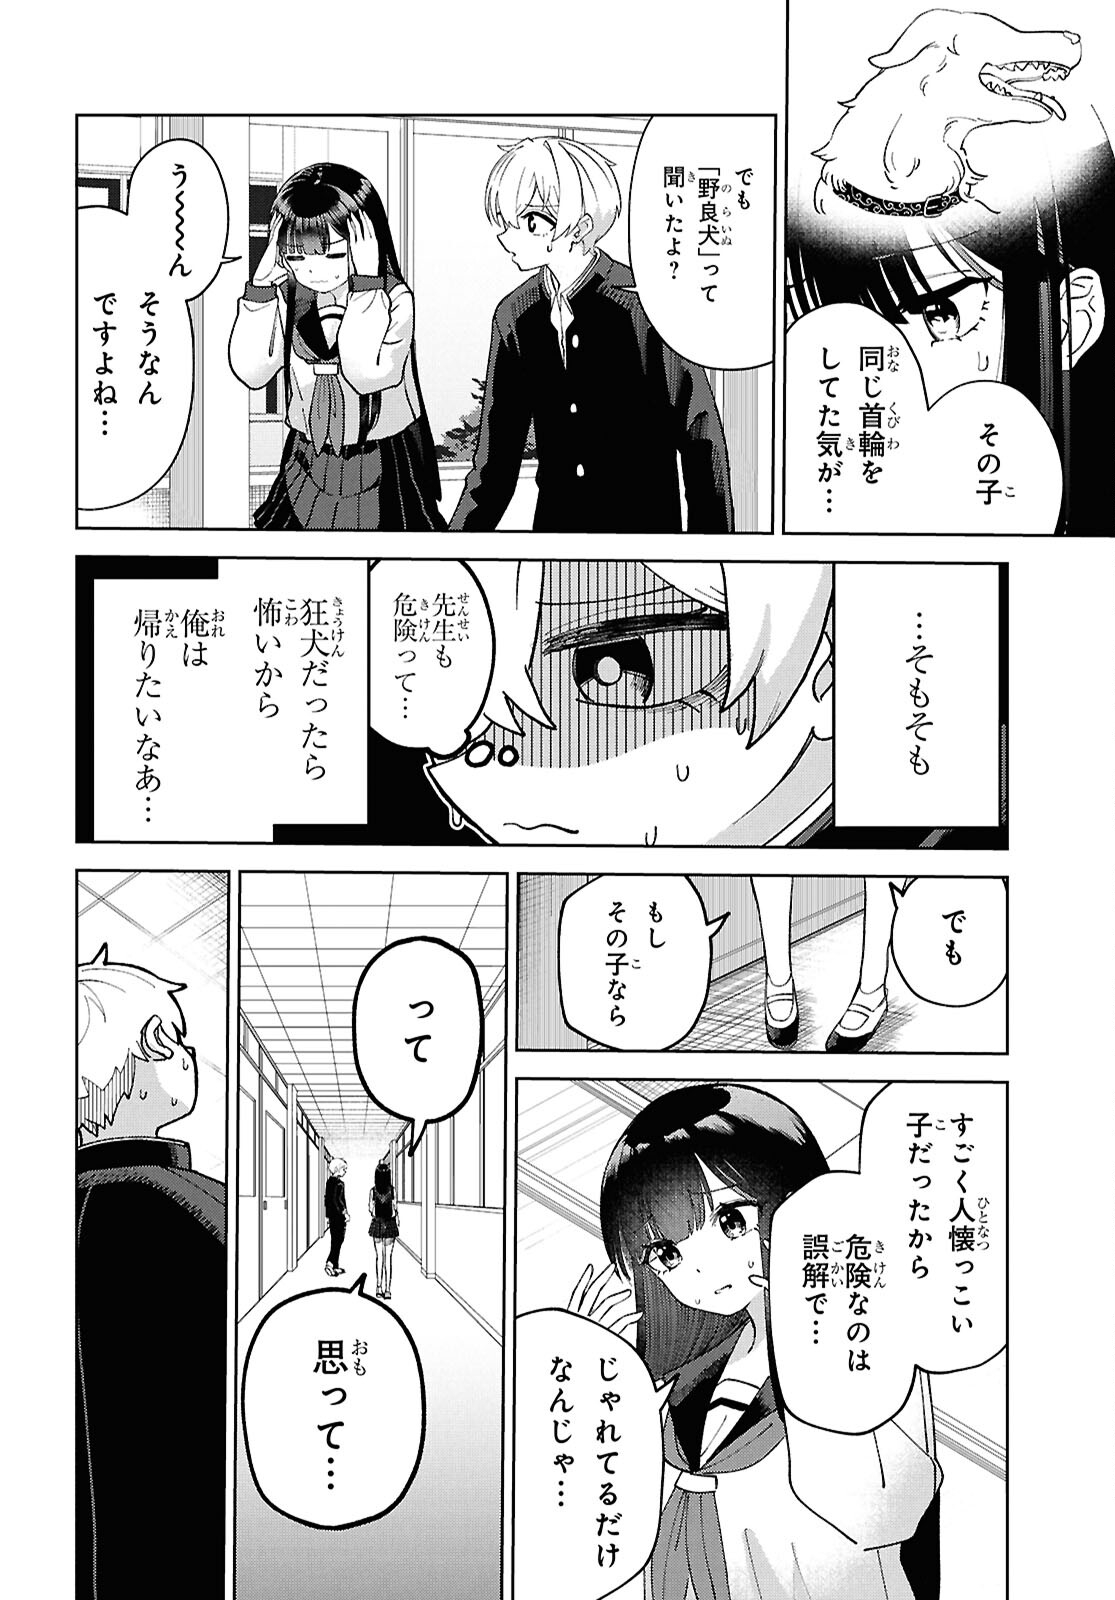 Garuru Girl - Chapter 4 - Page 10